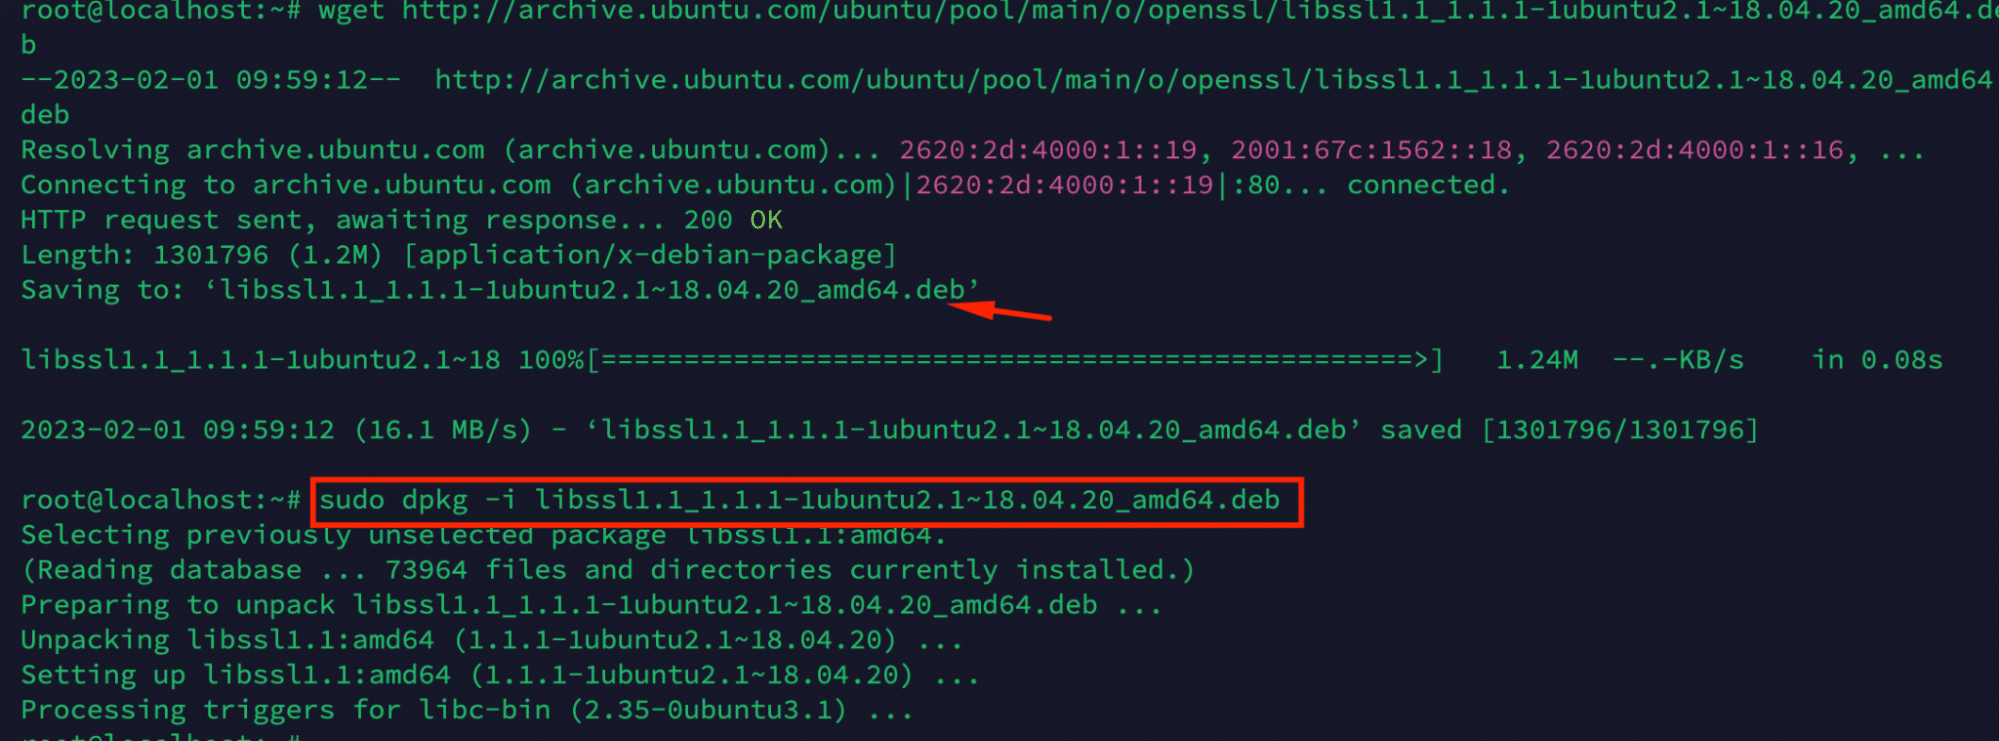 Step 1 to install mongoDB on ubuntu